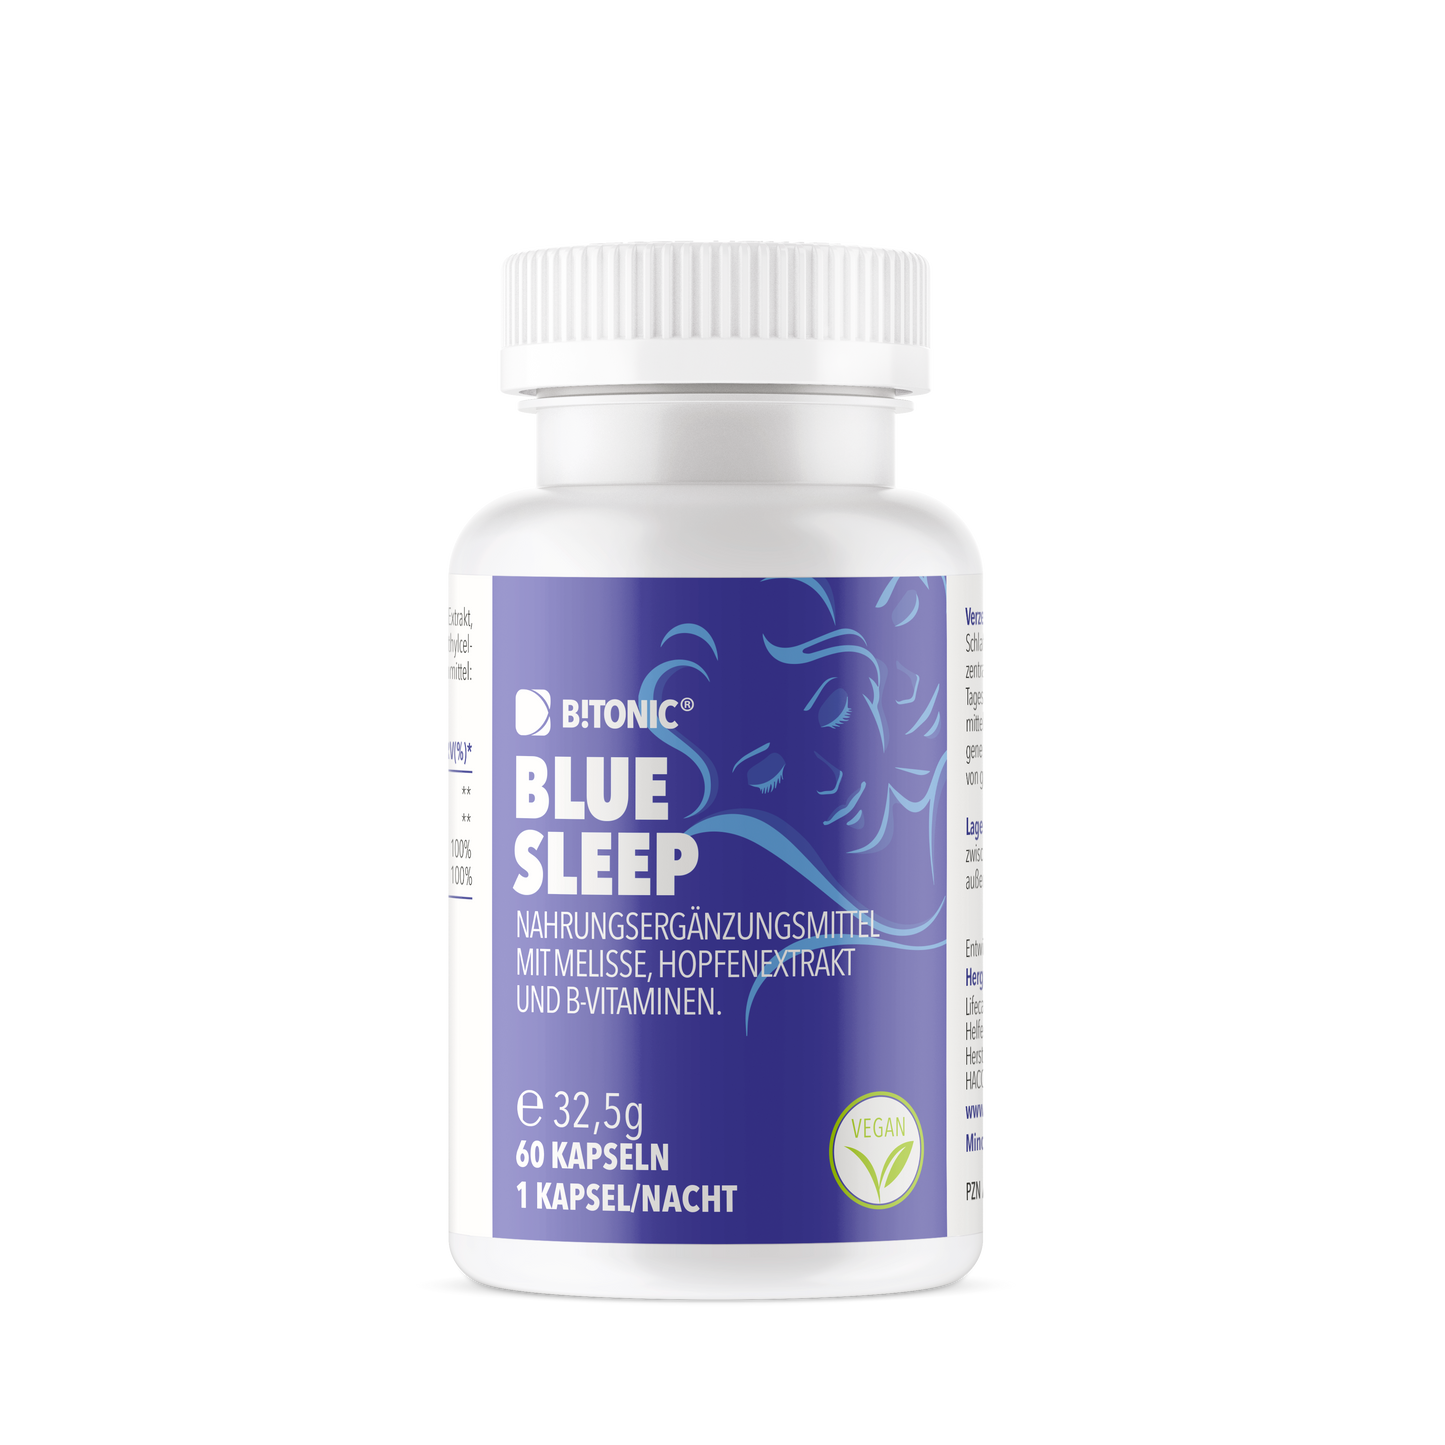 B!TONIC® Blue Sleep - Optimizatorul natural al somnului